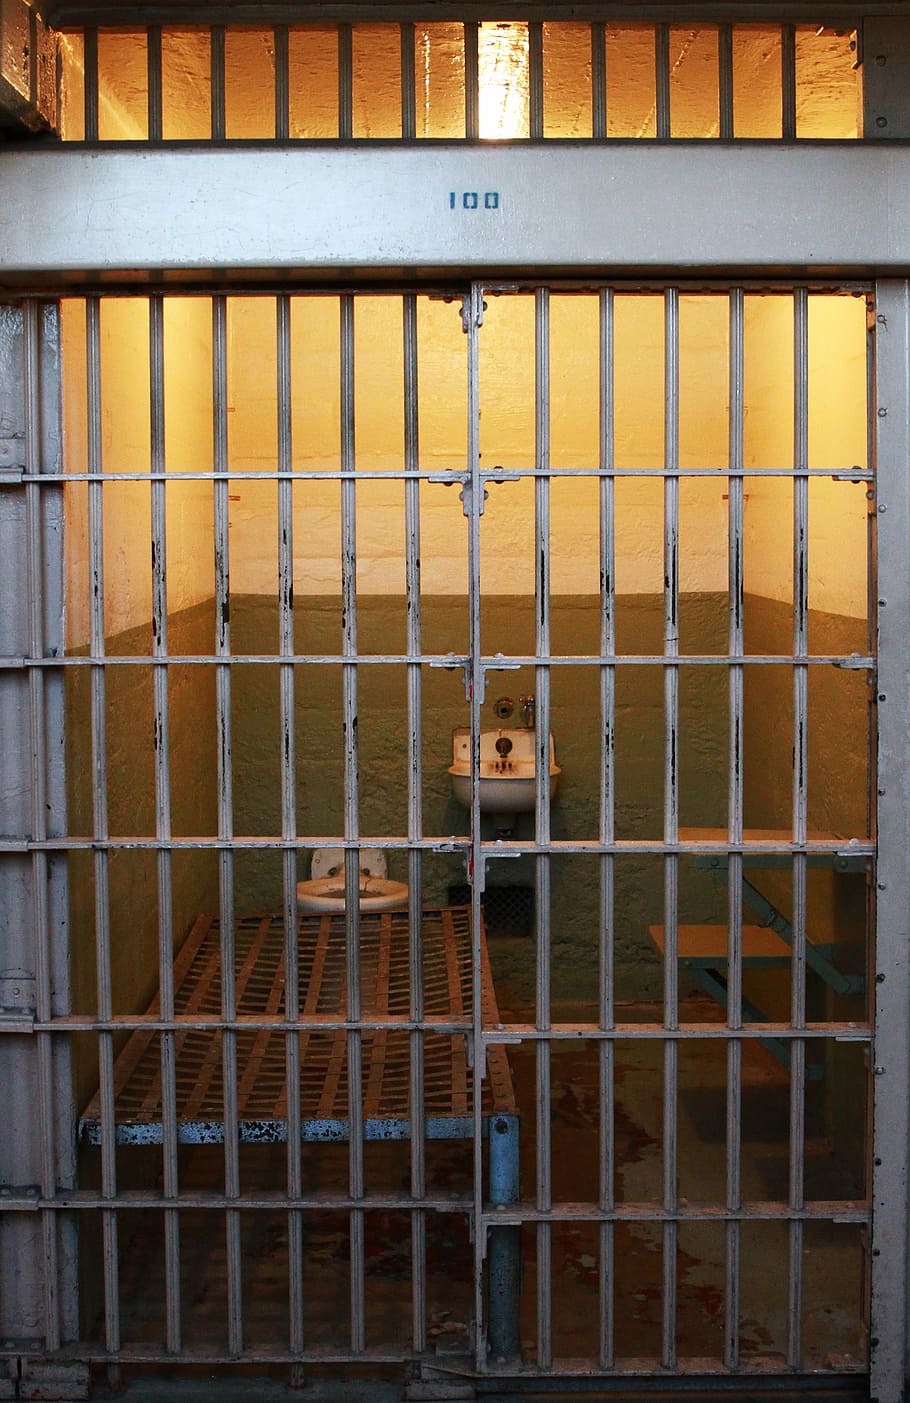 closed, gray, metal gate jail, jail, cell, alcatraz prison, bars, behind bars, criminal, prison